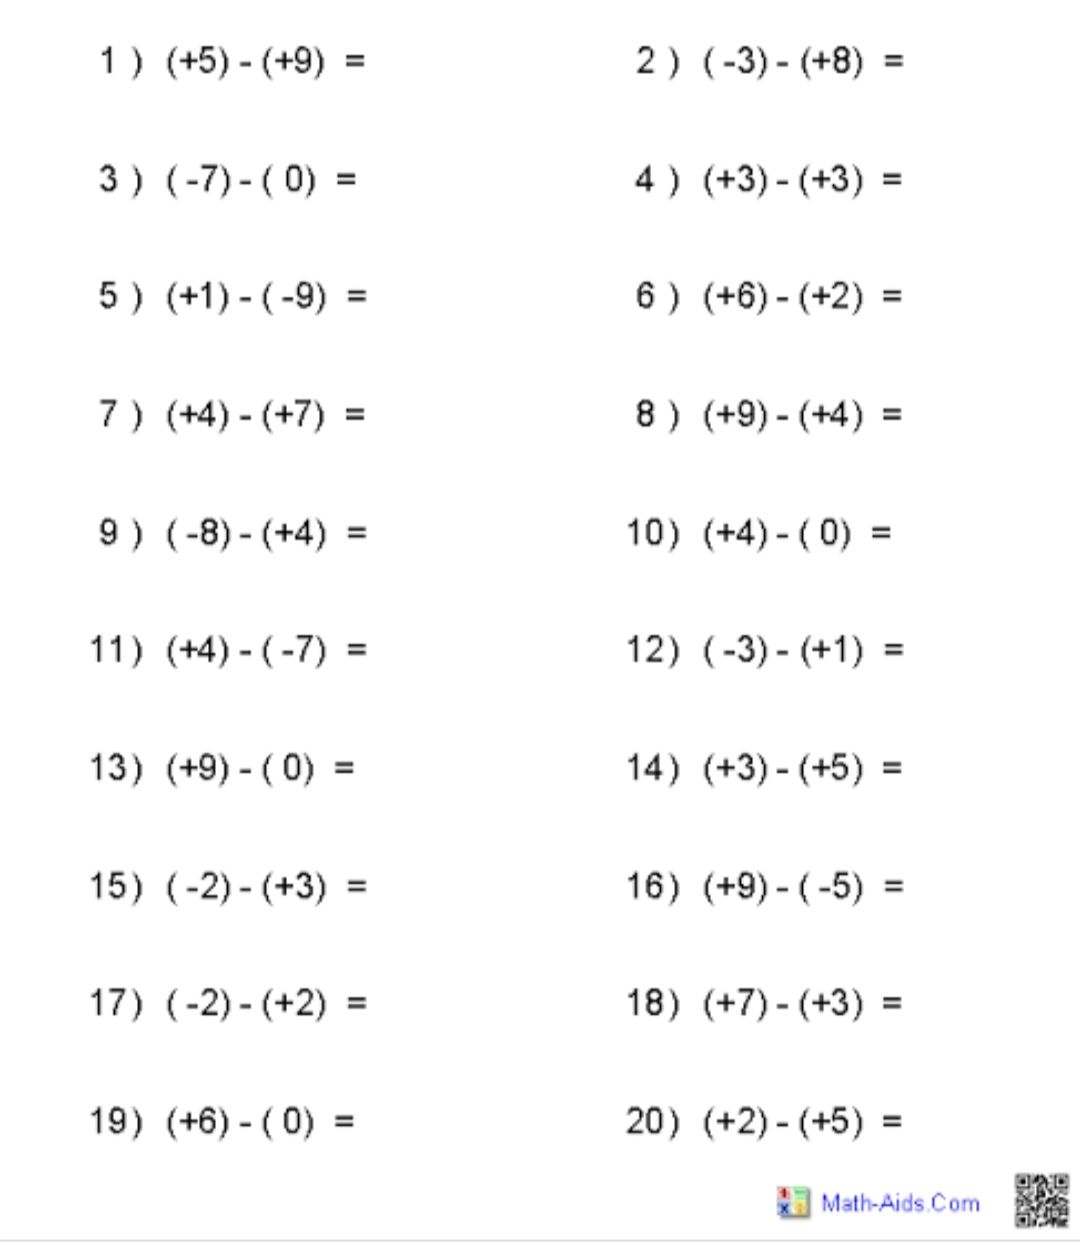 Maths Integers Test All Subjects Subjective Test Teachmint 0576